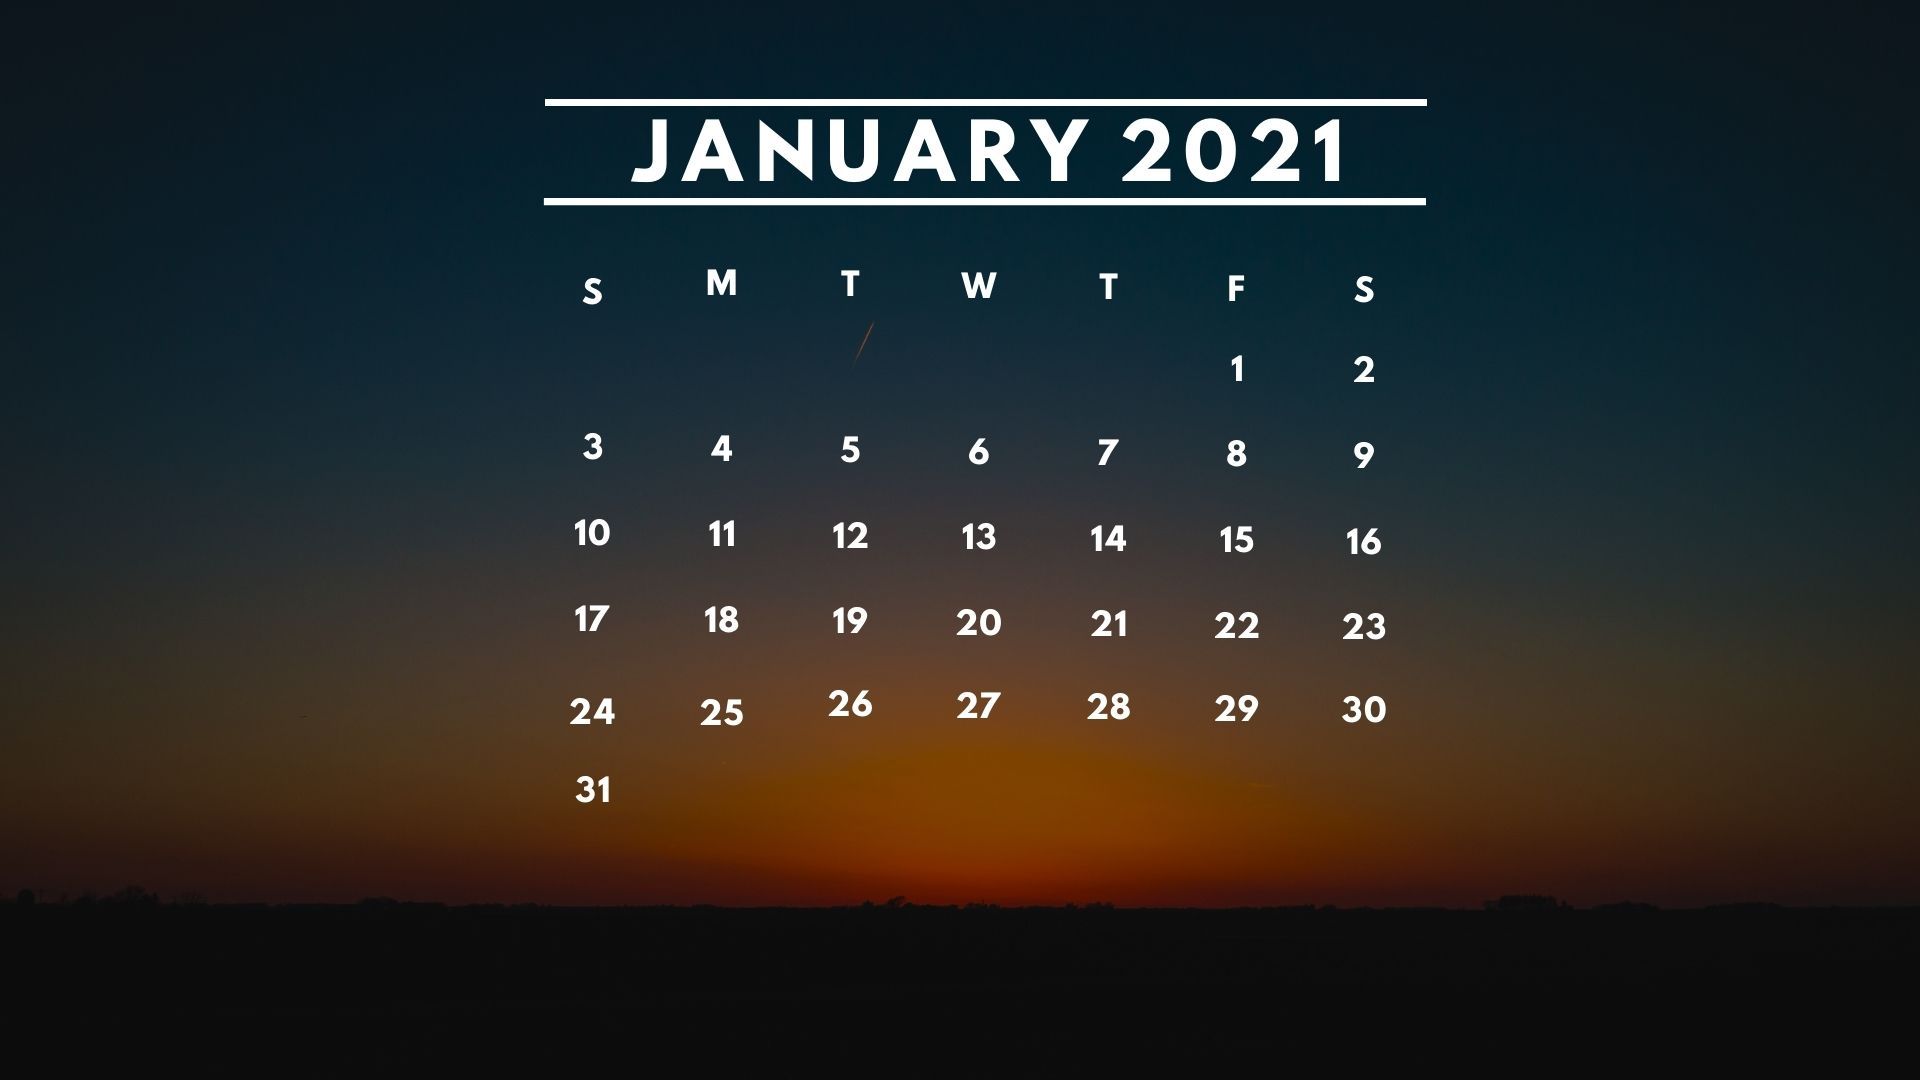 January 2021 Calendar Wallpapers - Wallpaper Cave